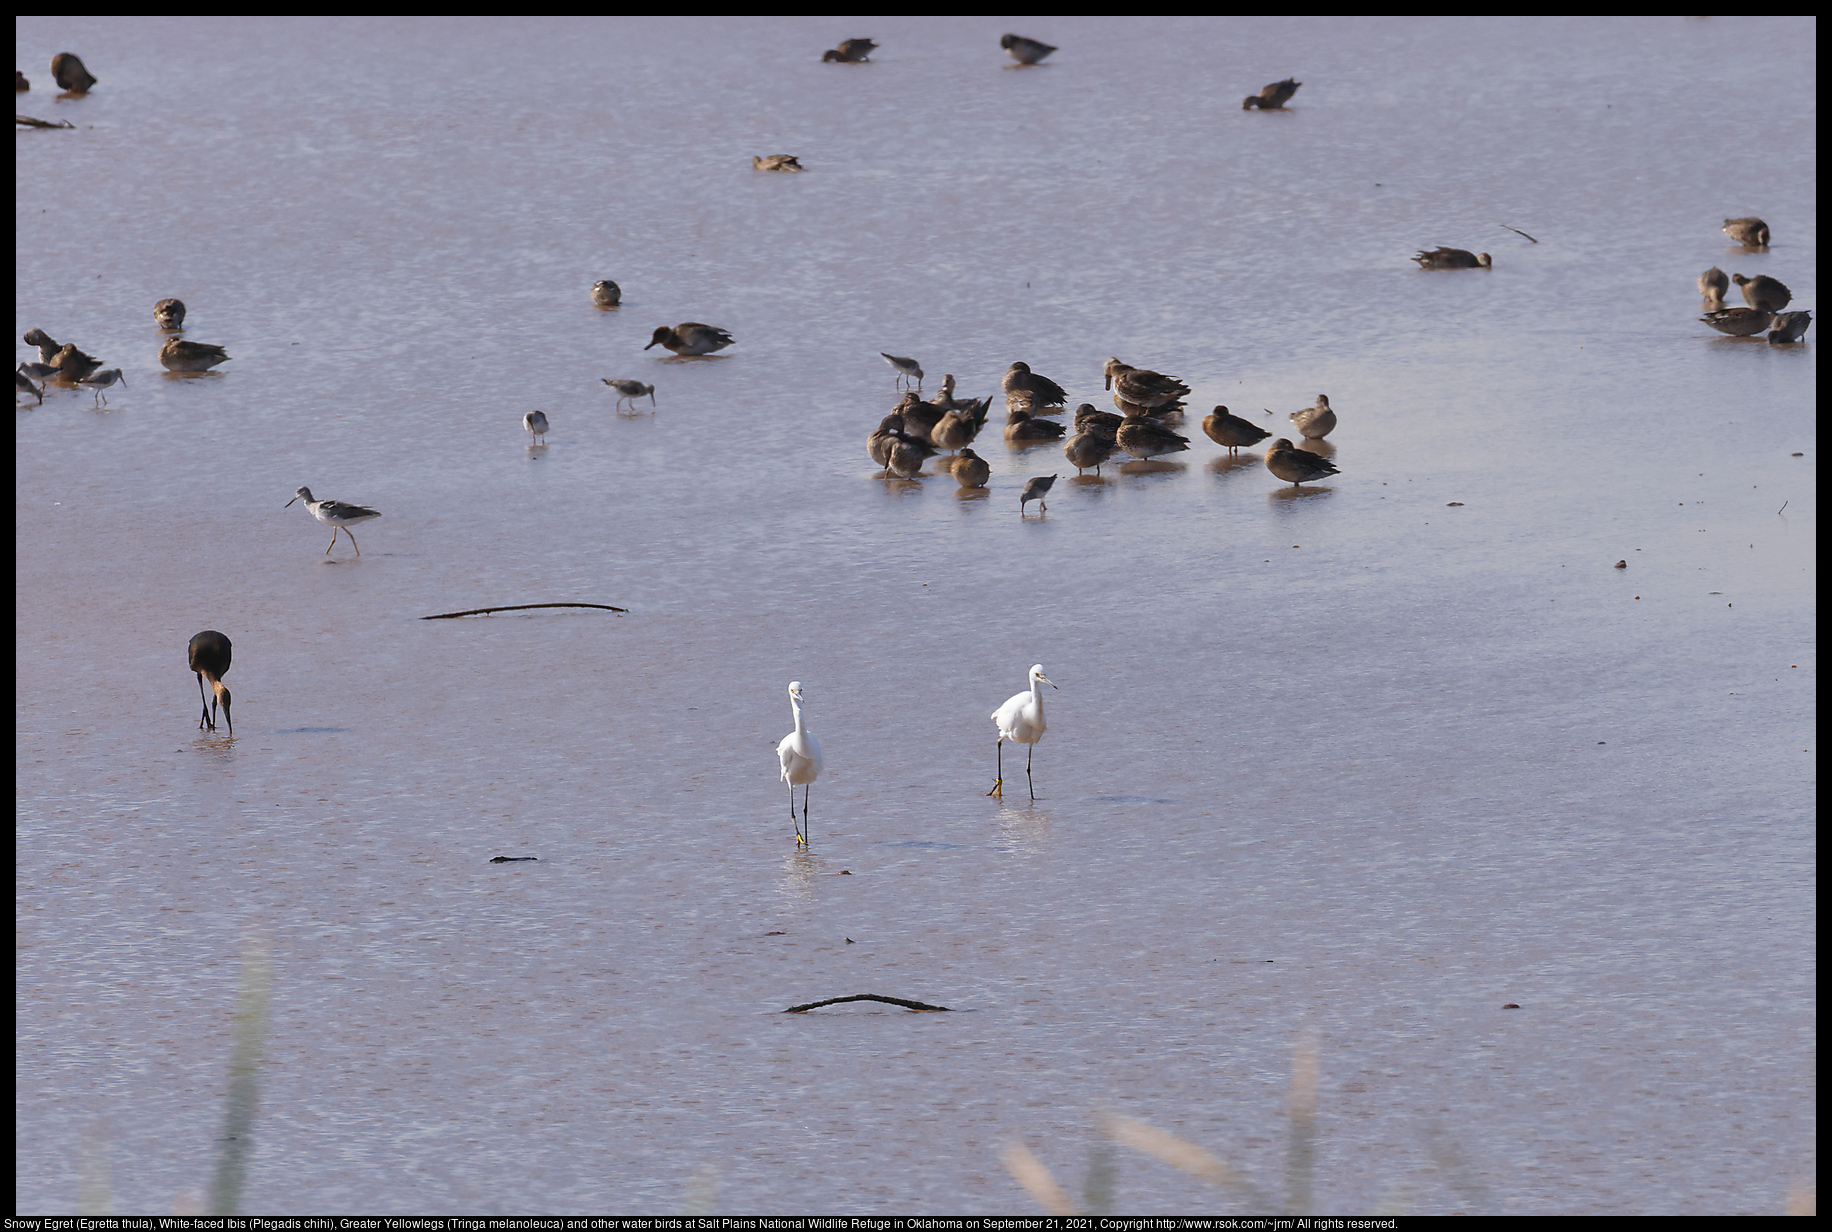 Snowy Egret (Egretta thula), White-faced Ibis (Plegadis chihi), Greater Yellowlegs (Tringa melanoleuca) and other water birds at Salt Plains National Wildlife Refuge in Oklahoma on September 21, 2021